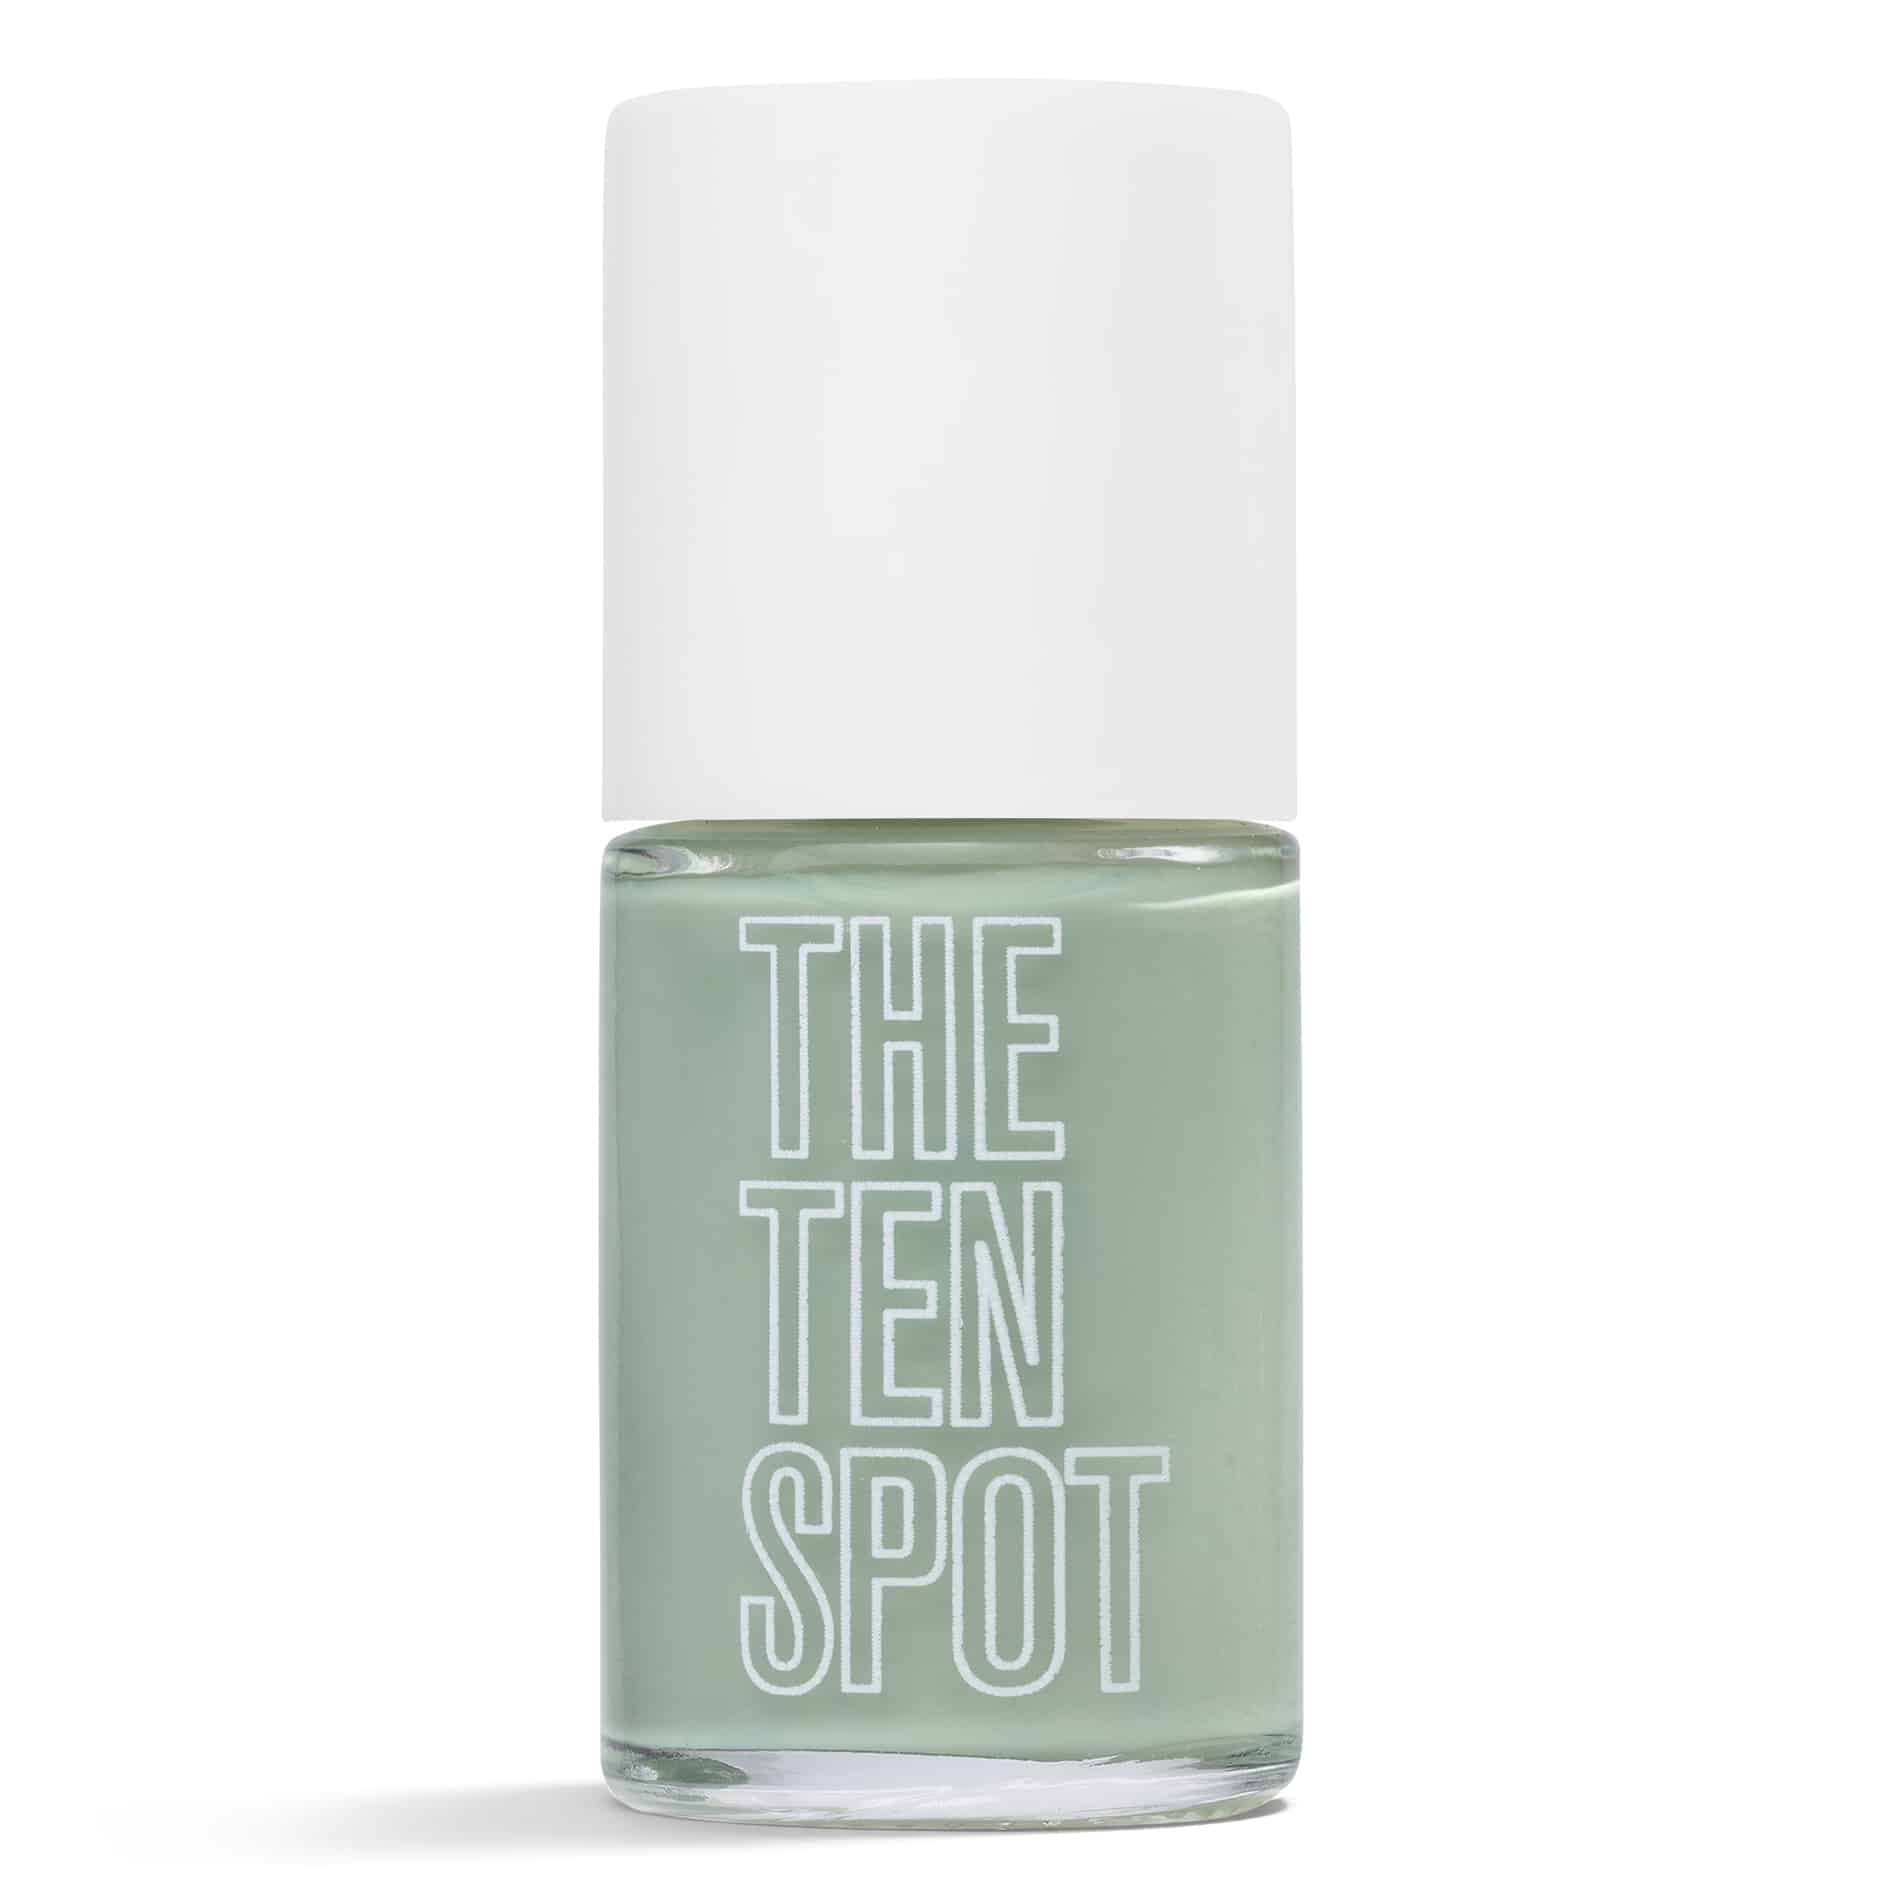 The Ten Spot nail polish